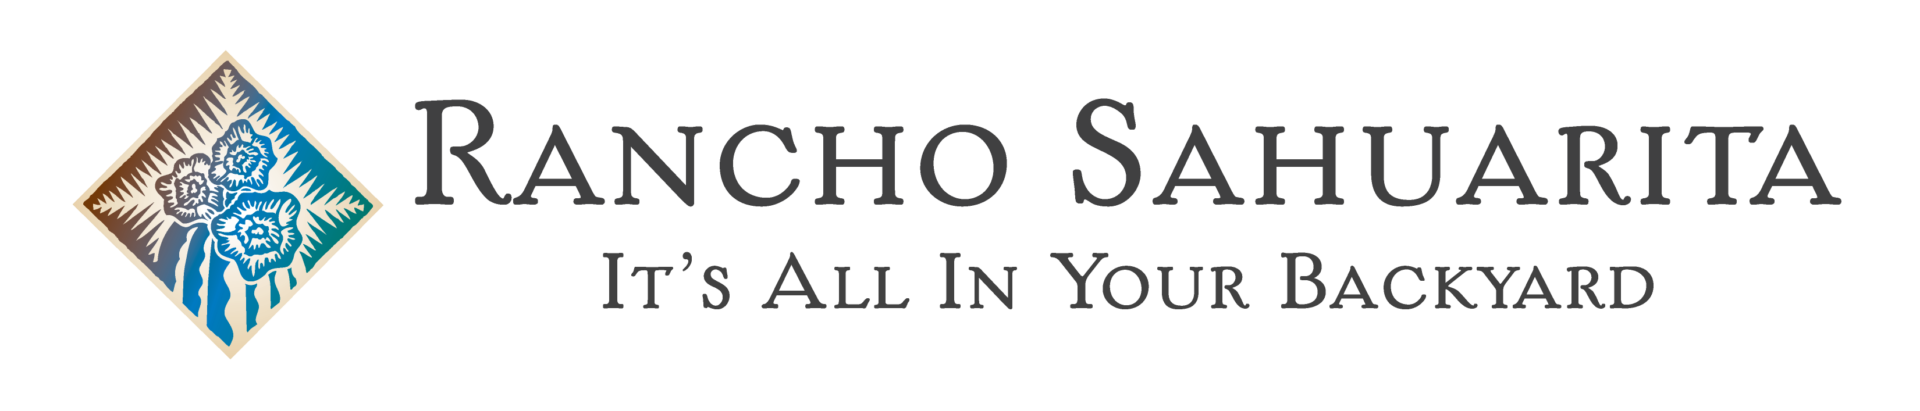 Rancho Sahuarita logo